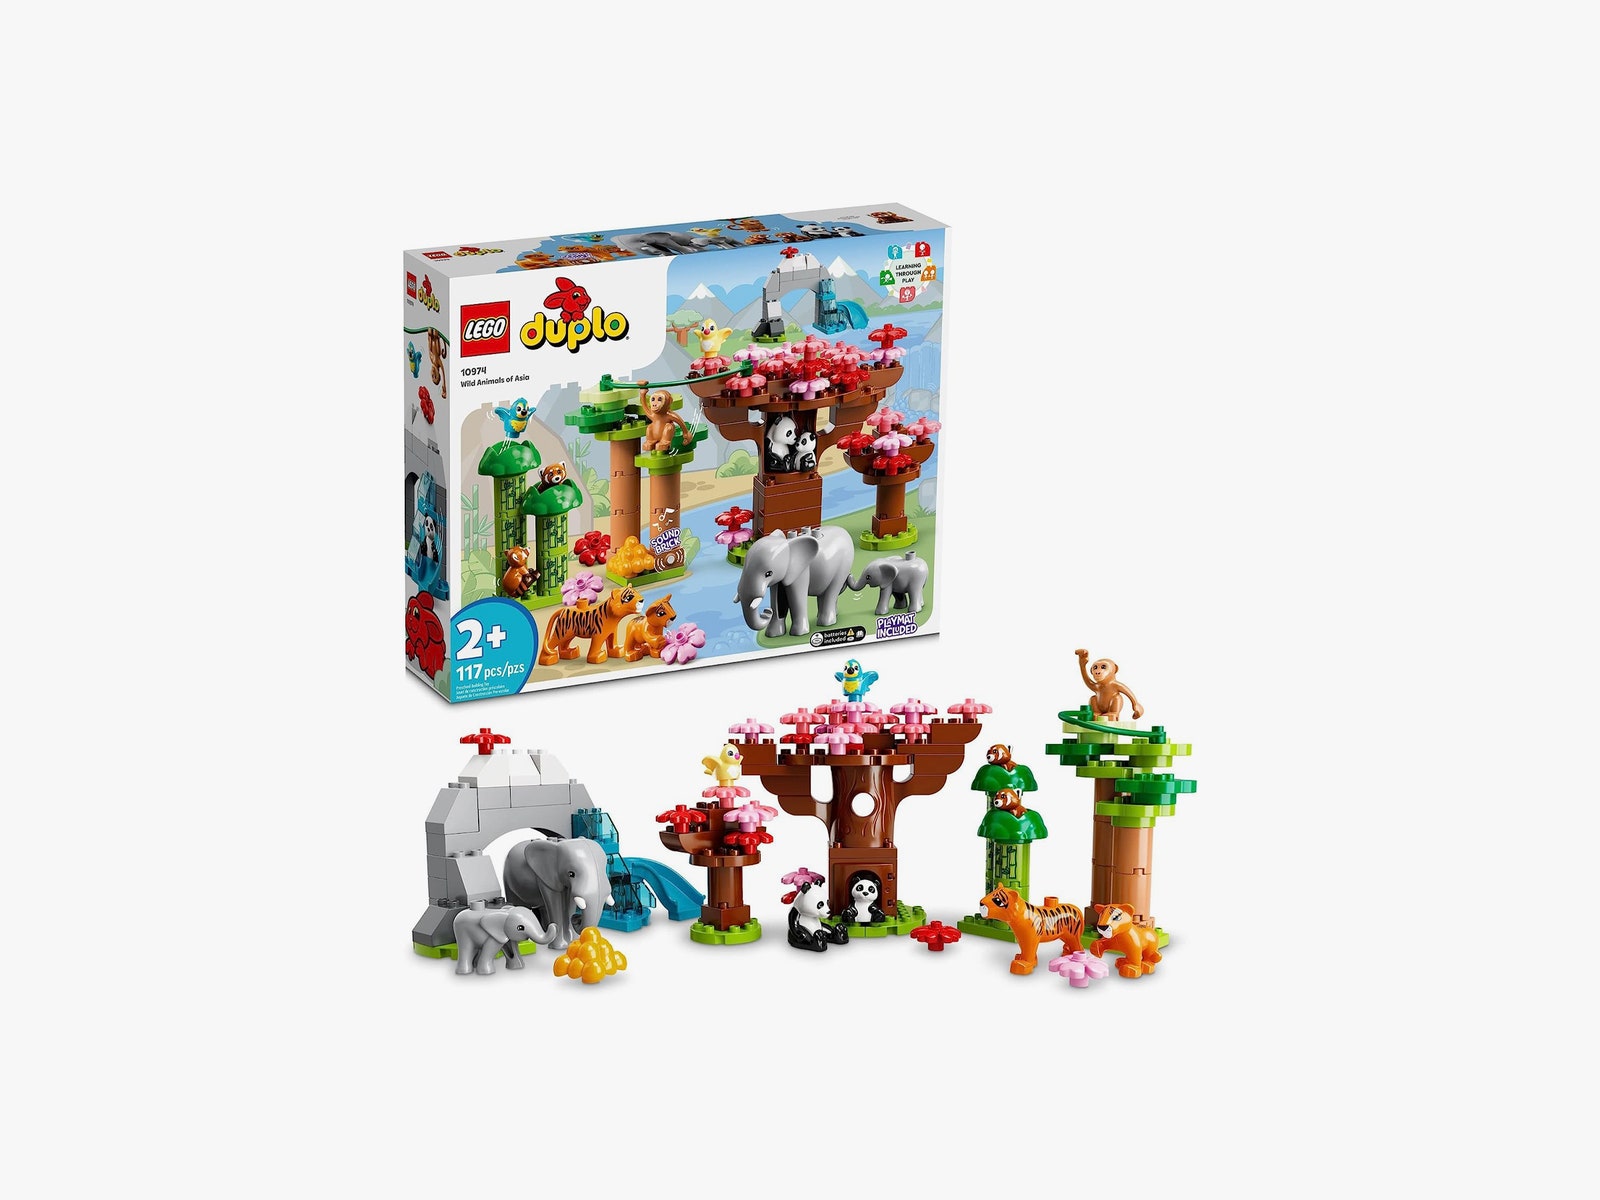 LEGO Wild Animals set